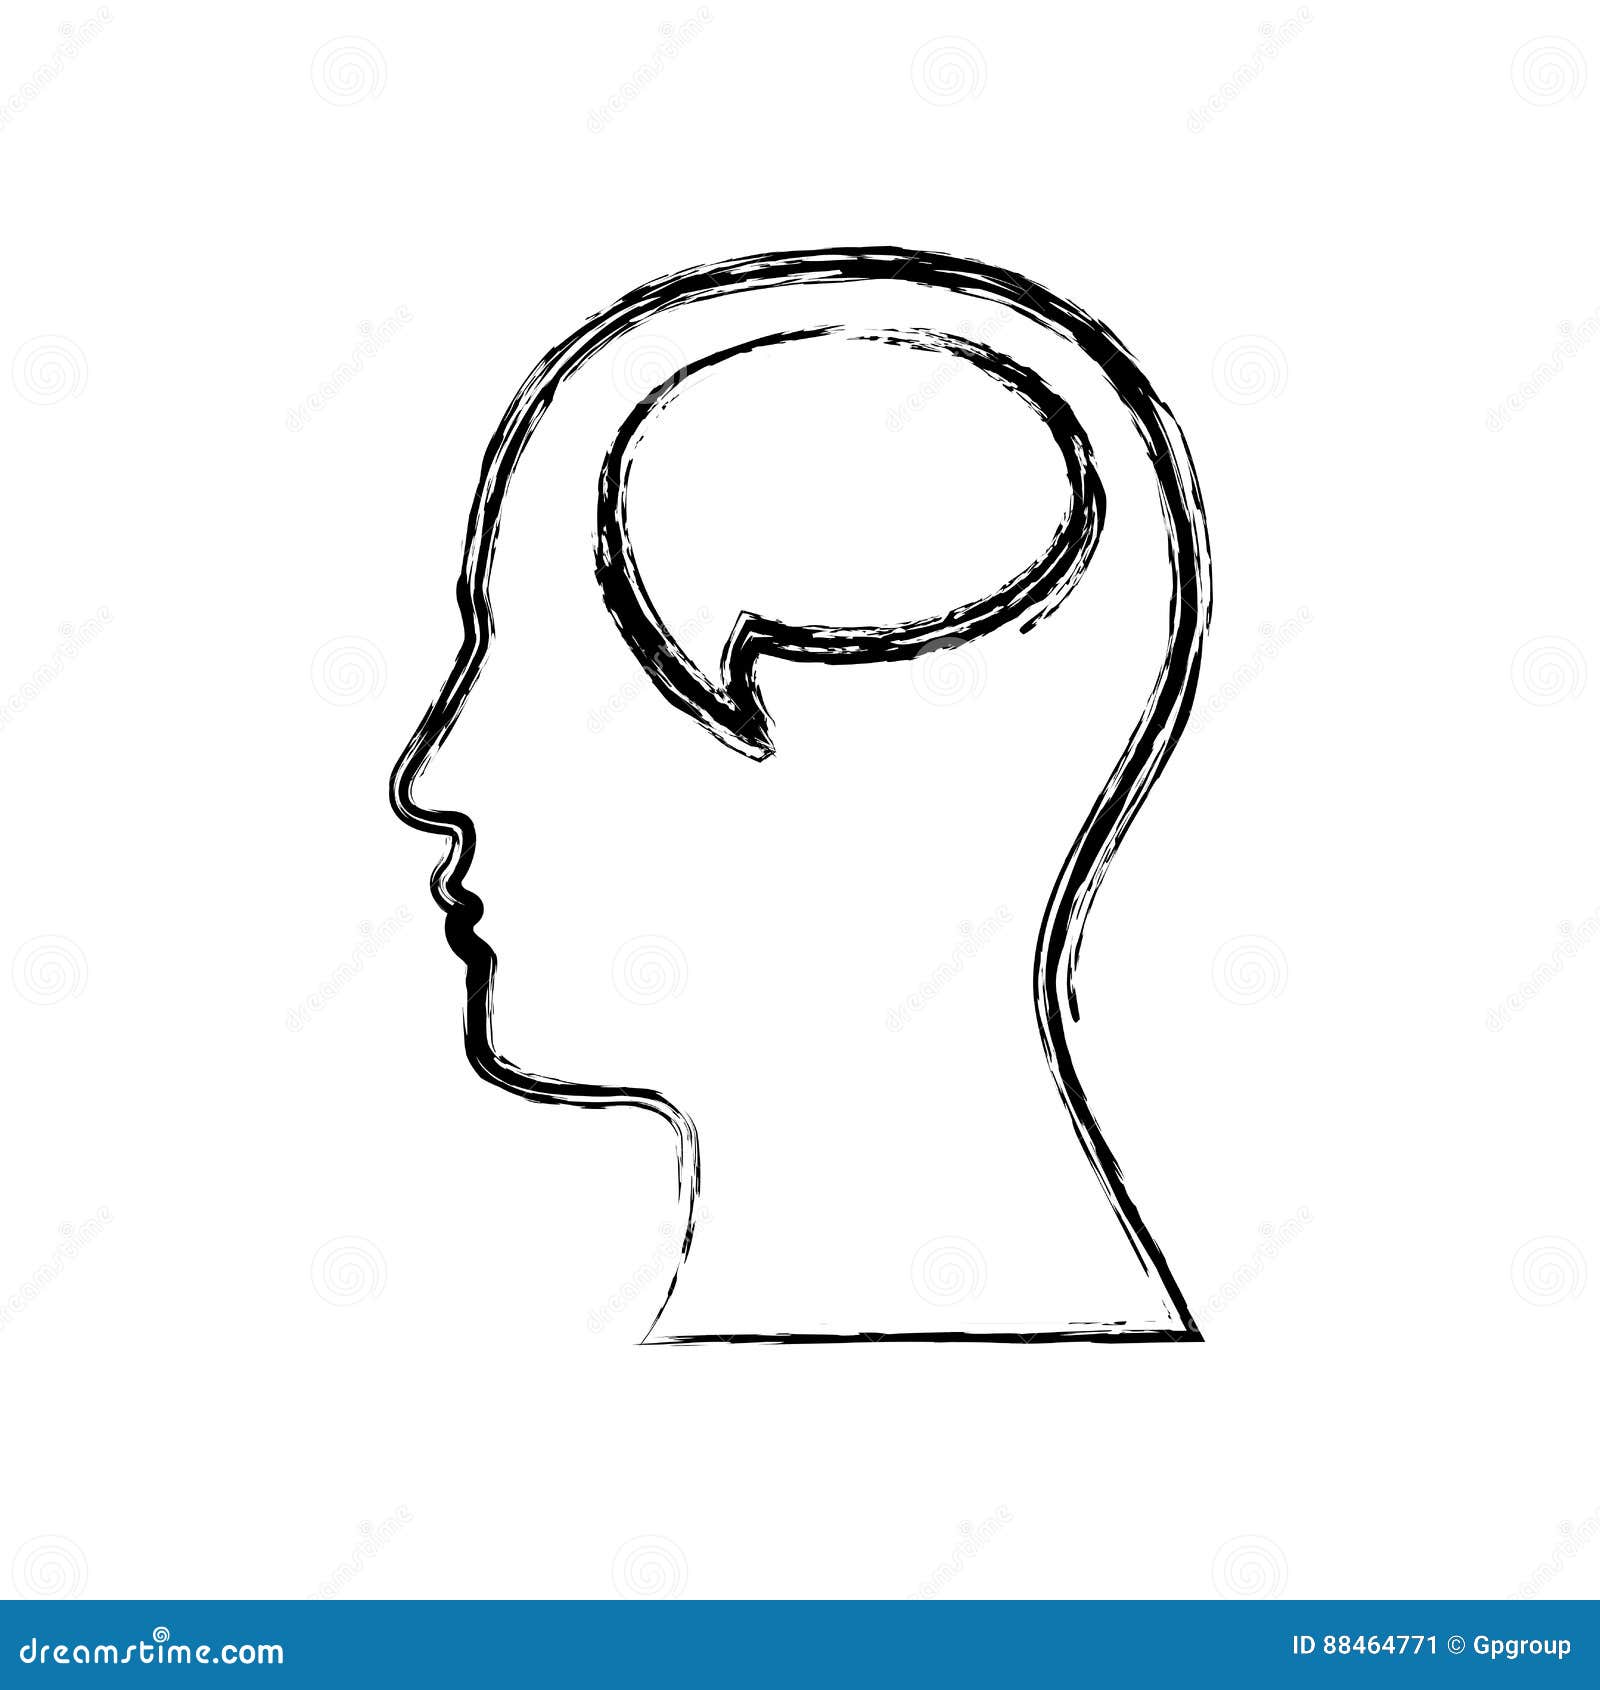 Brain Sketch Images  Free Download on Freepik